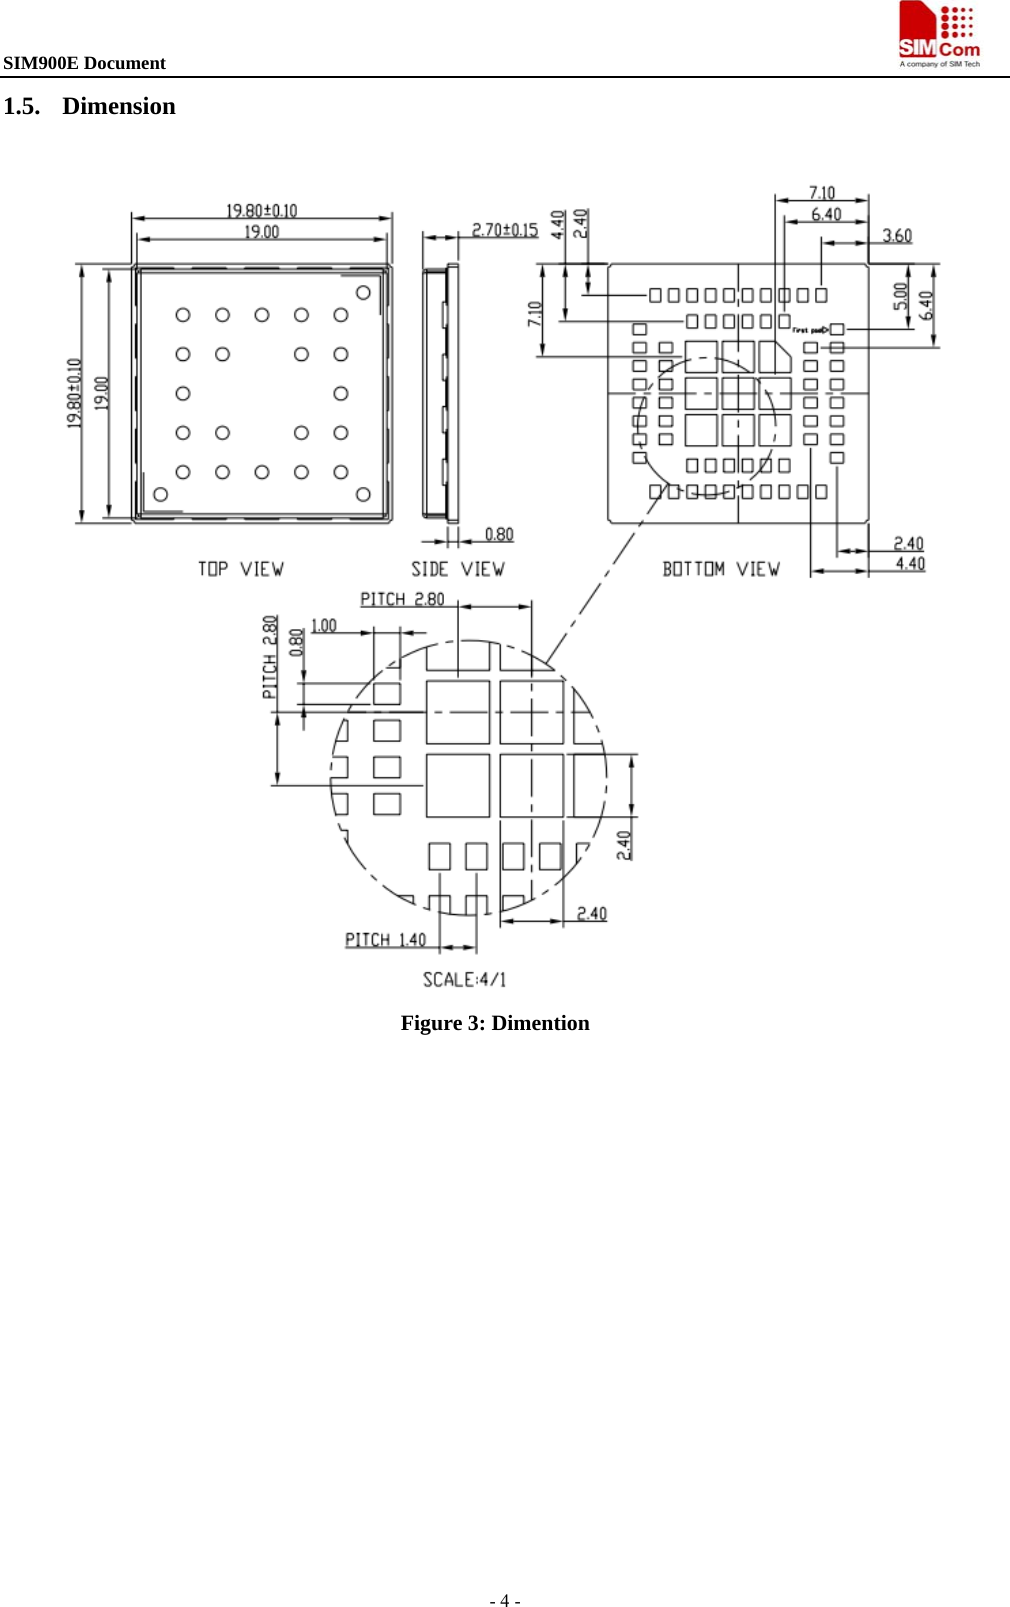 SIM900E Document                                                                                   - 4 - 1.5. Dimension  Figure 3: Dimention  